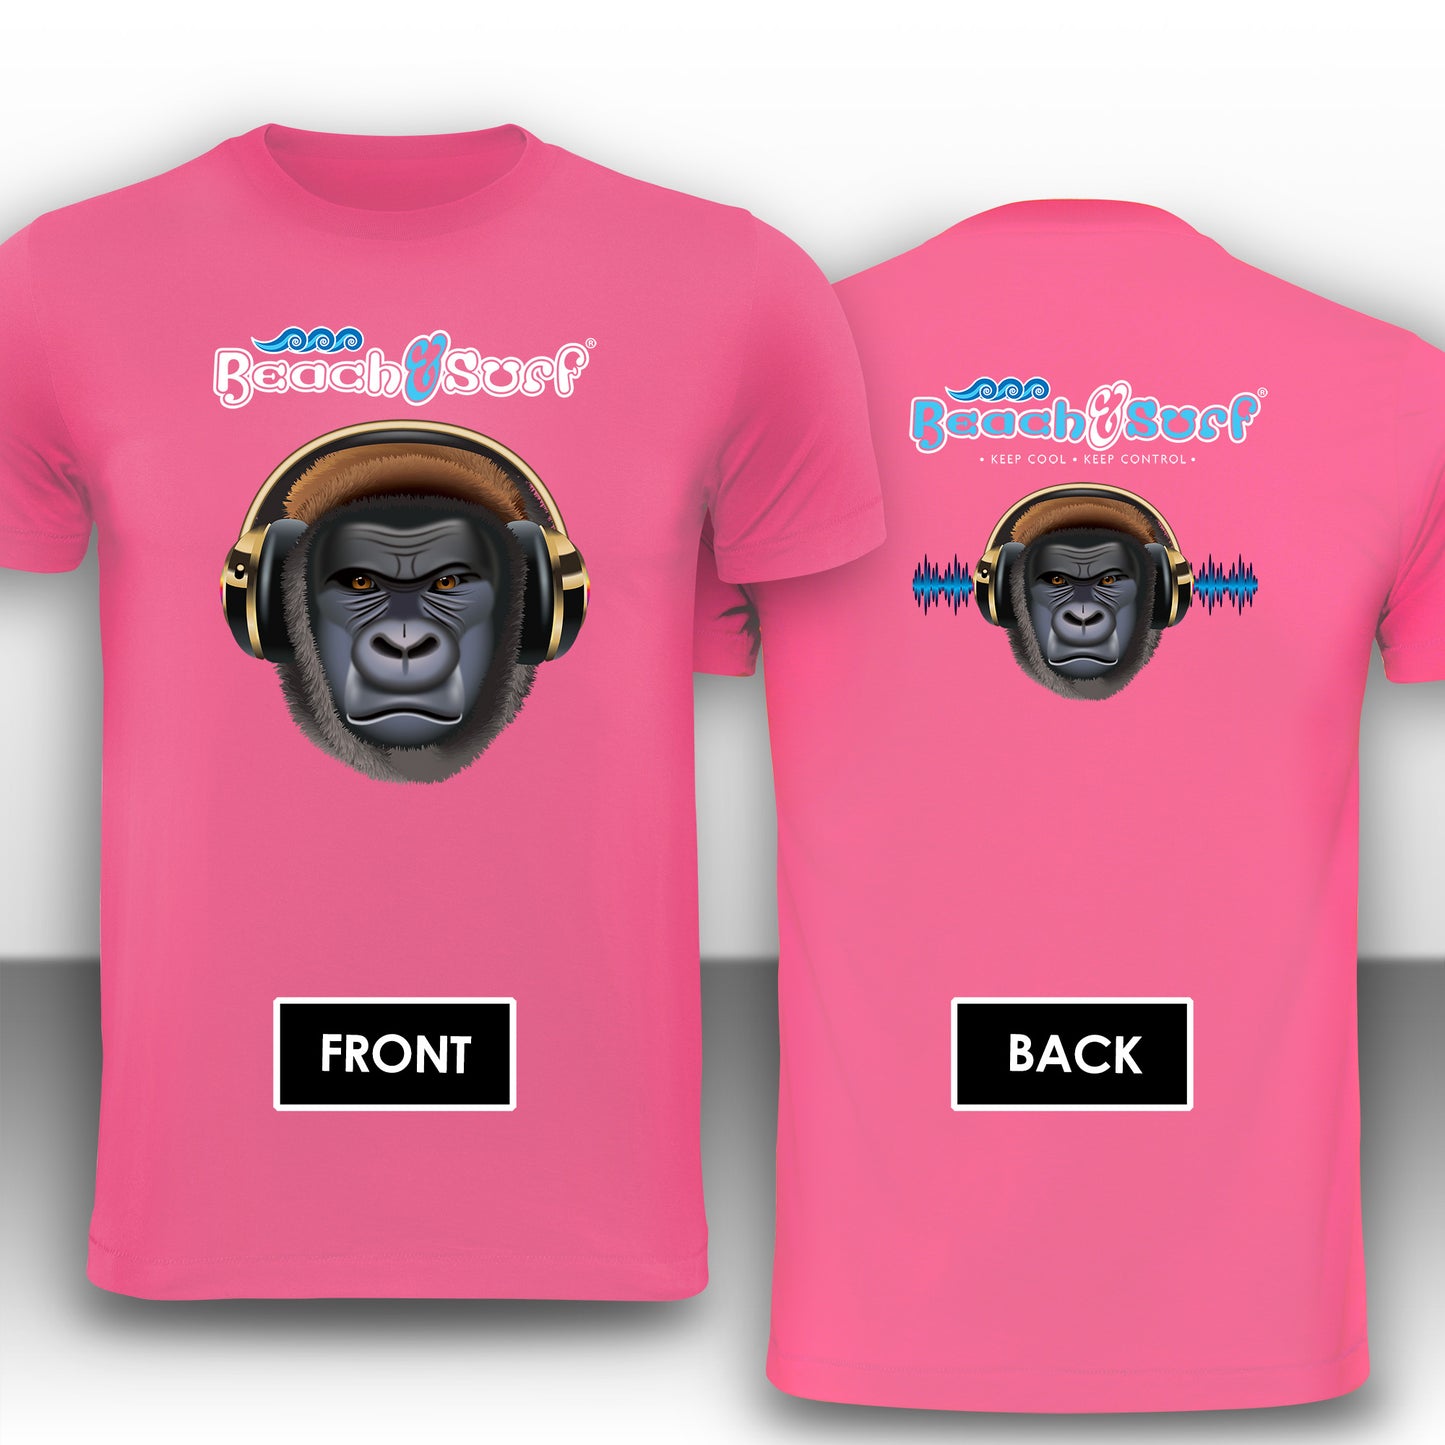 Gorilla Music Animal T-Shirt - Beach & Sure Leisure Wear